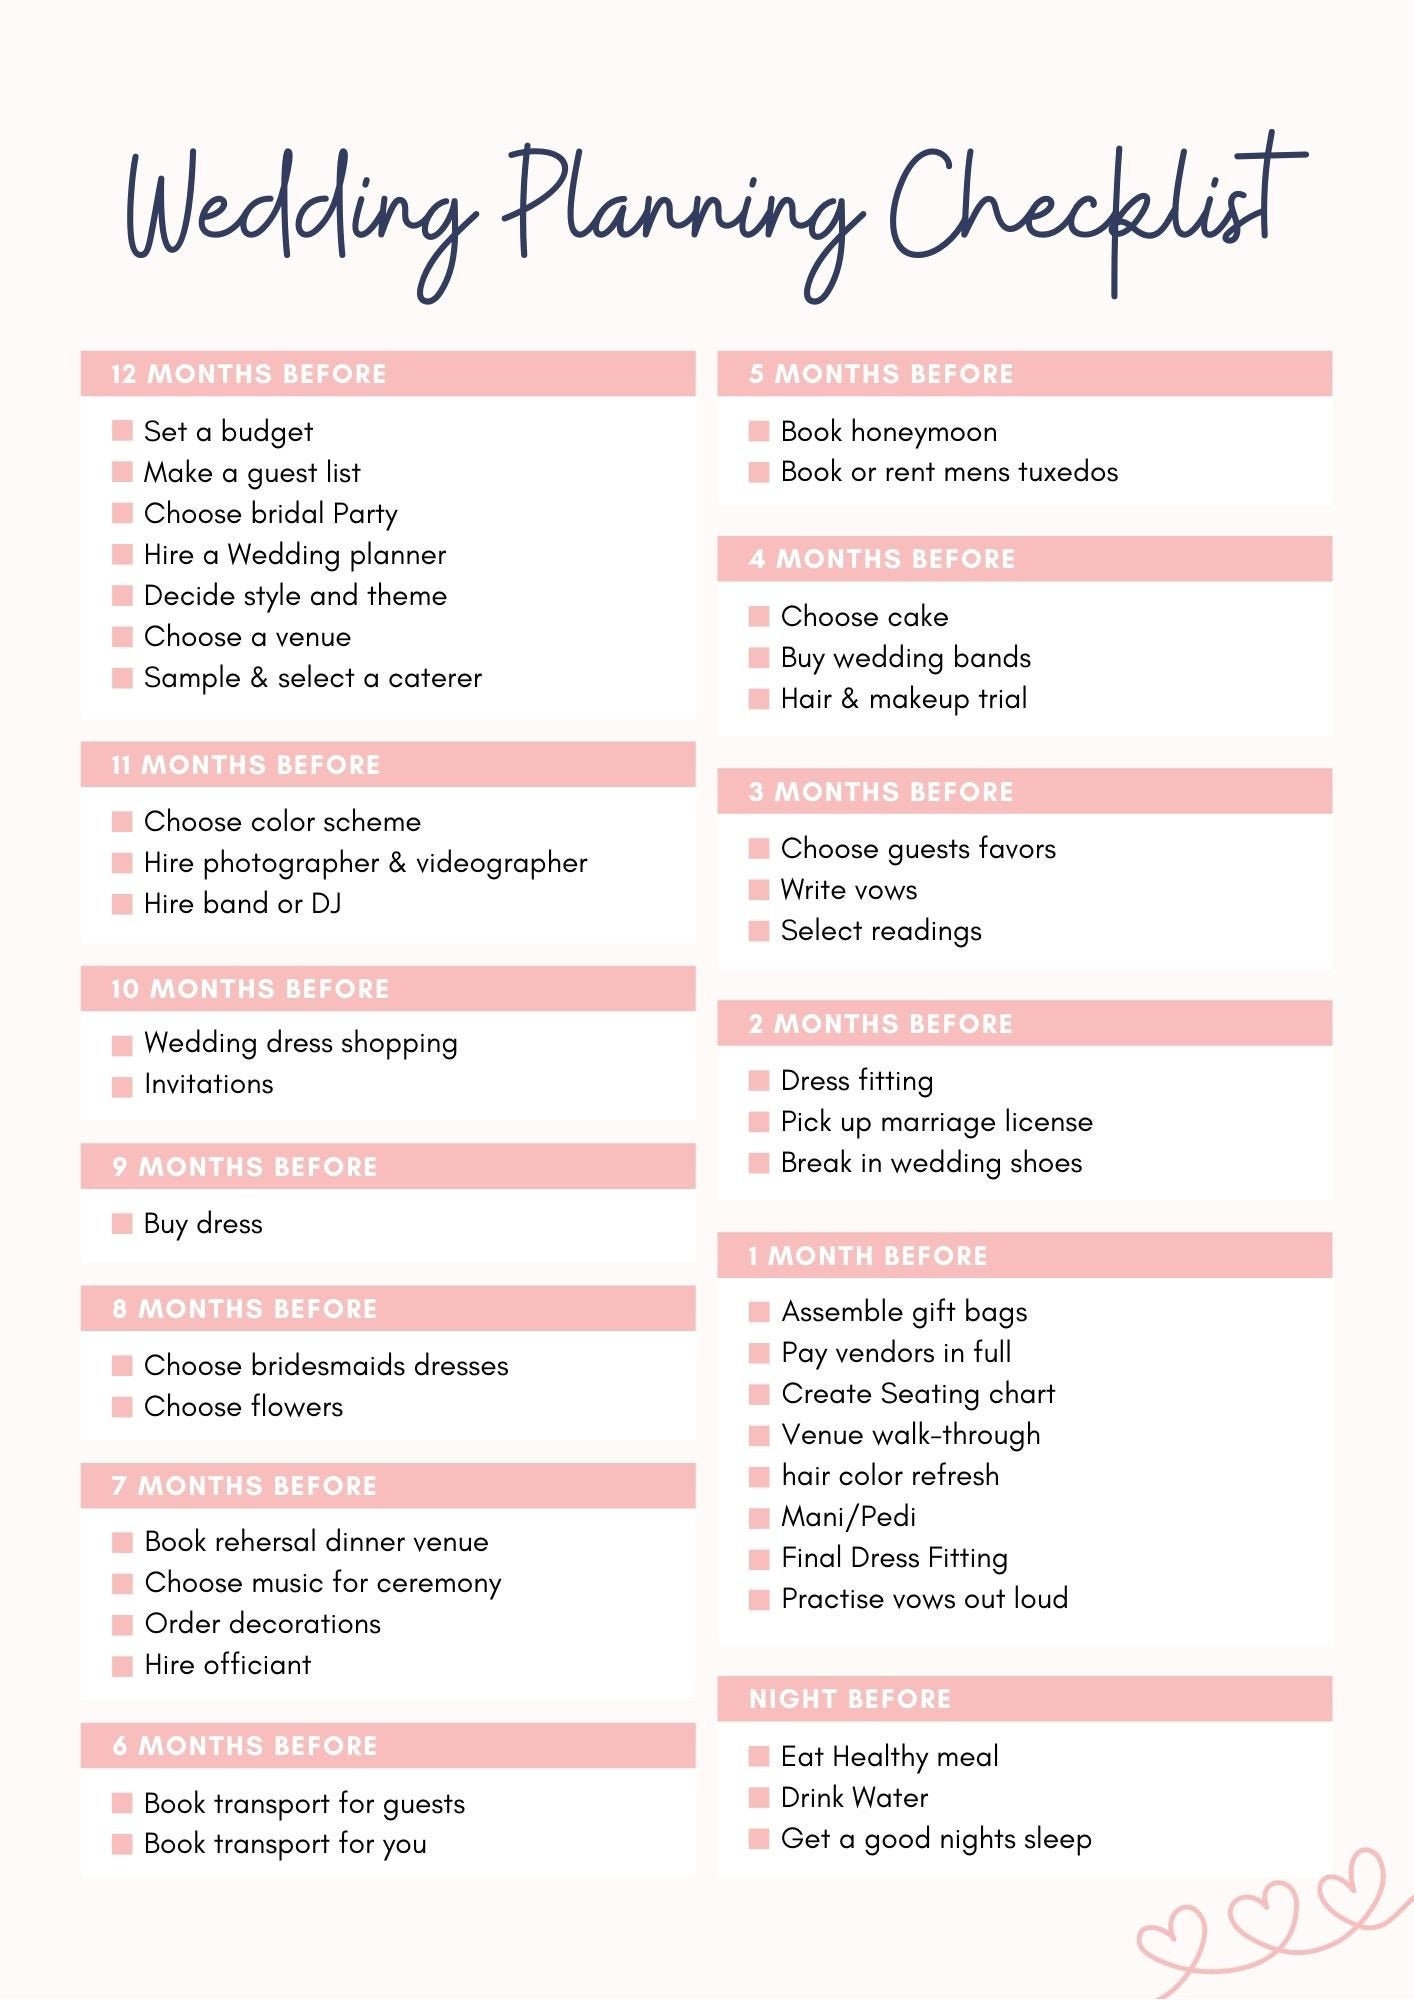 wedding-planning-checklist-etsy